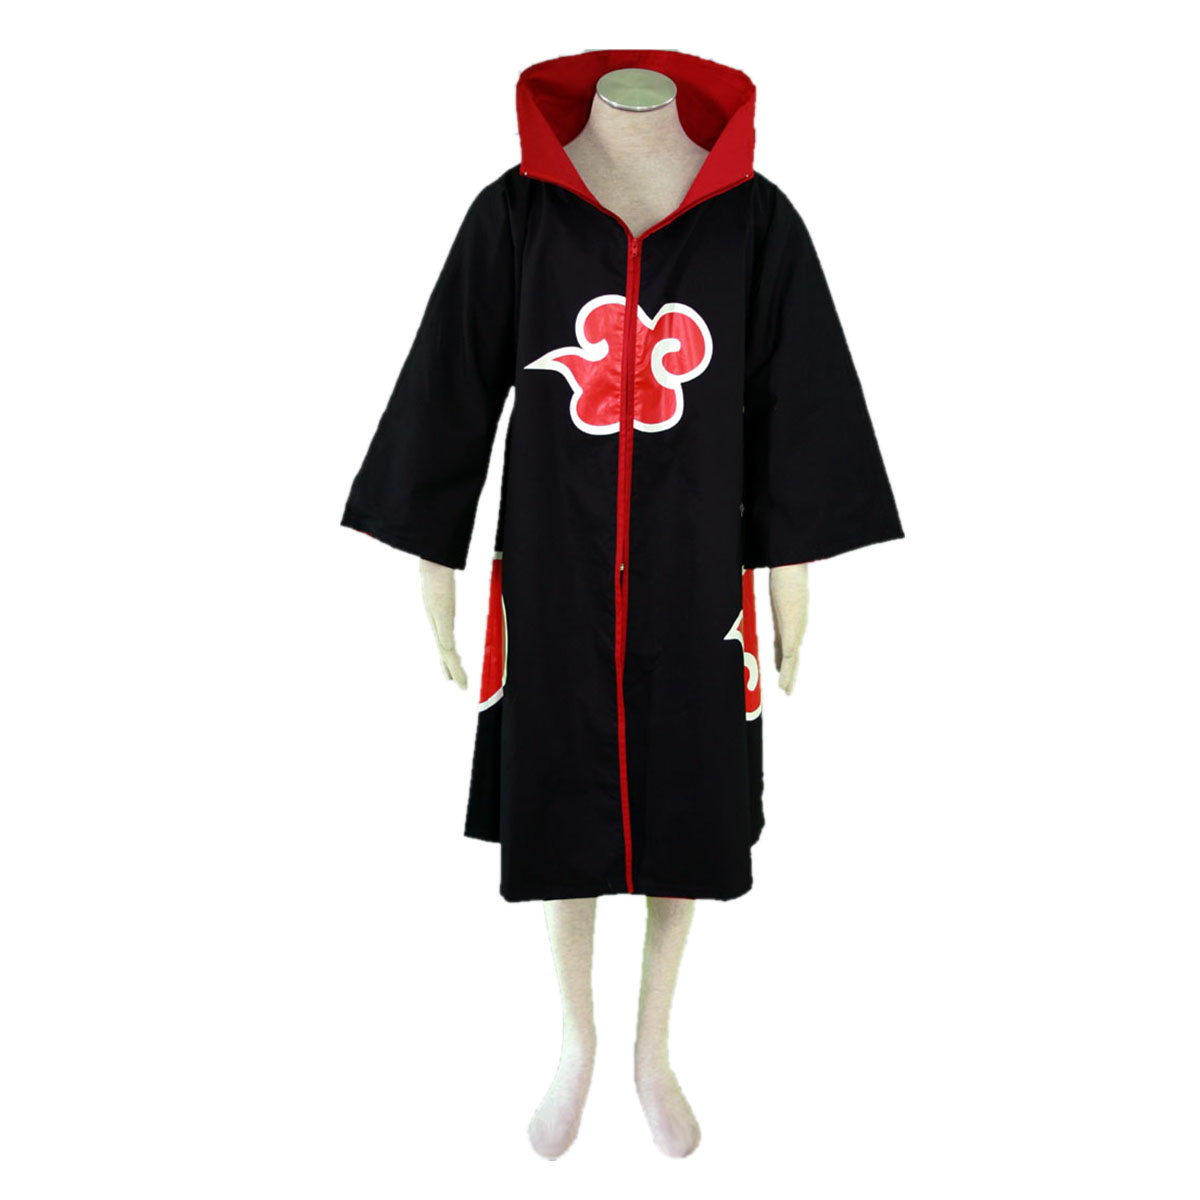 Naruto Akatsuki organization 1 Anime Cosplay Costumes Outfit